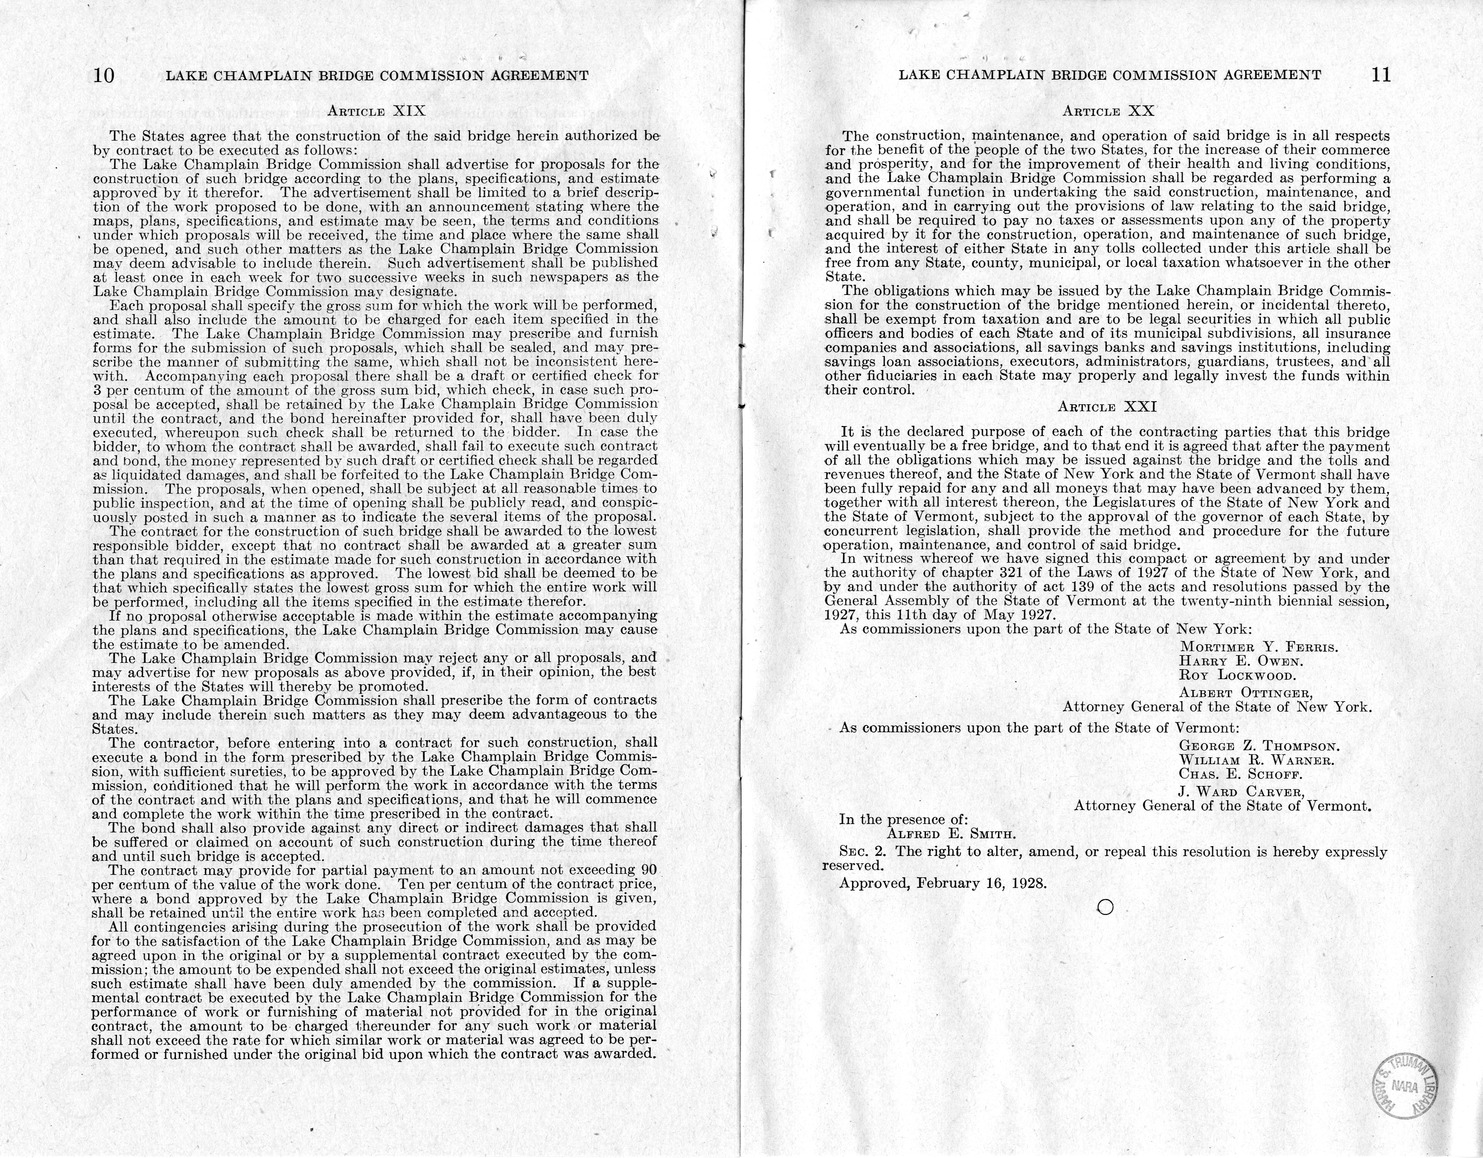 Memorandum from Frederick J. Bailey to M. C. Latta, H.J. Res. 113, Relating to the Creation of the Lake Champlain Bridge Commission